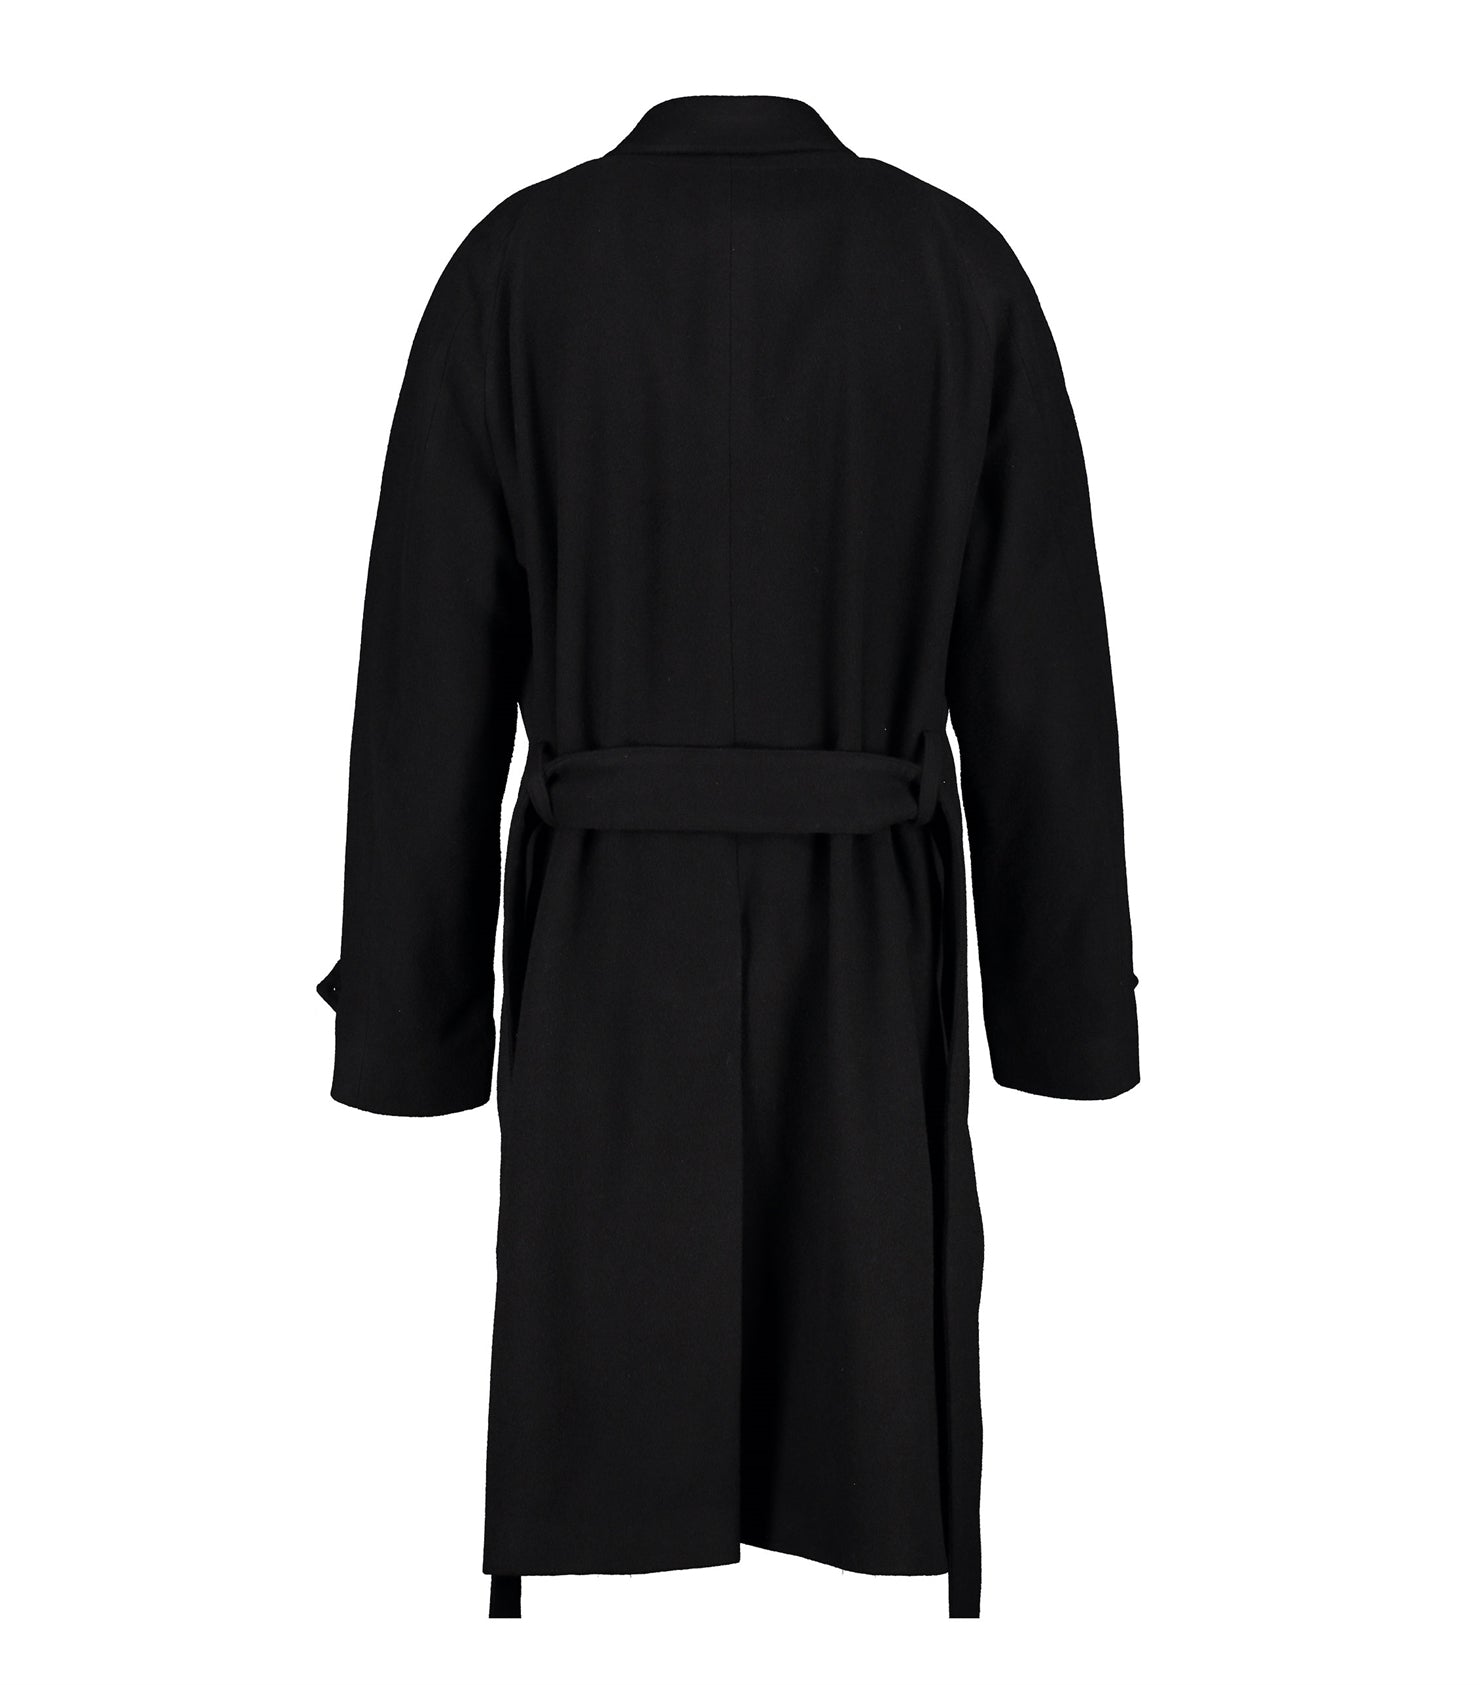 Neo Belt Black Coat